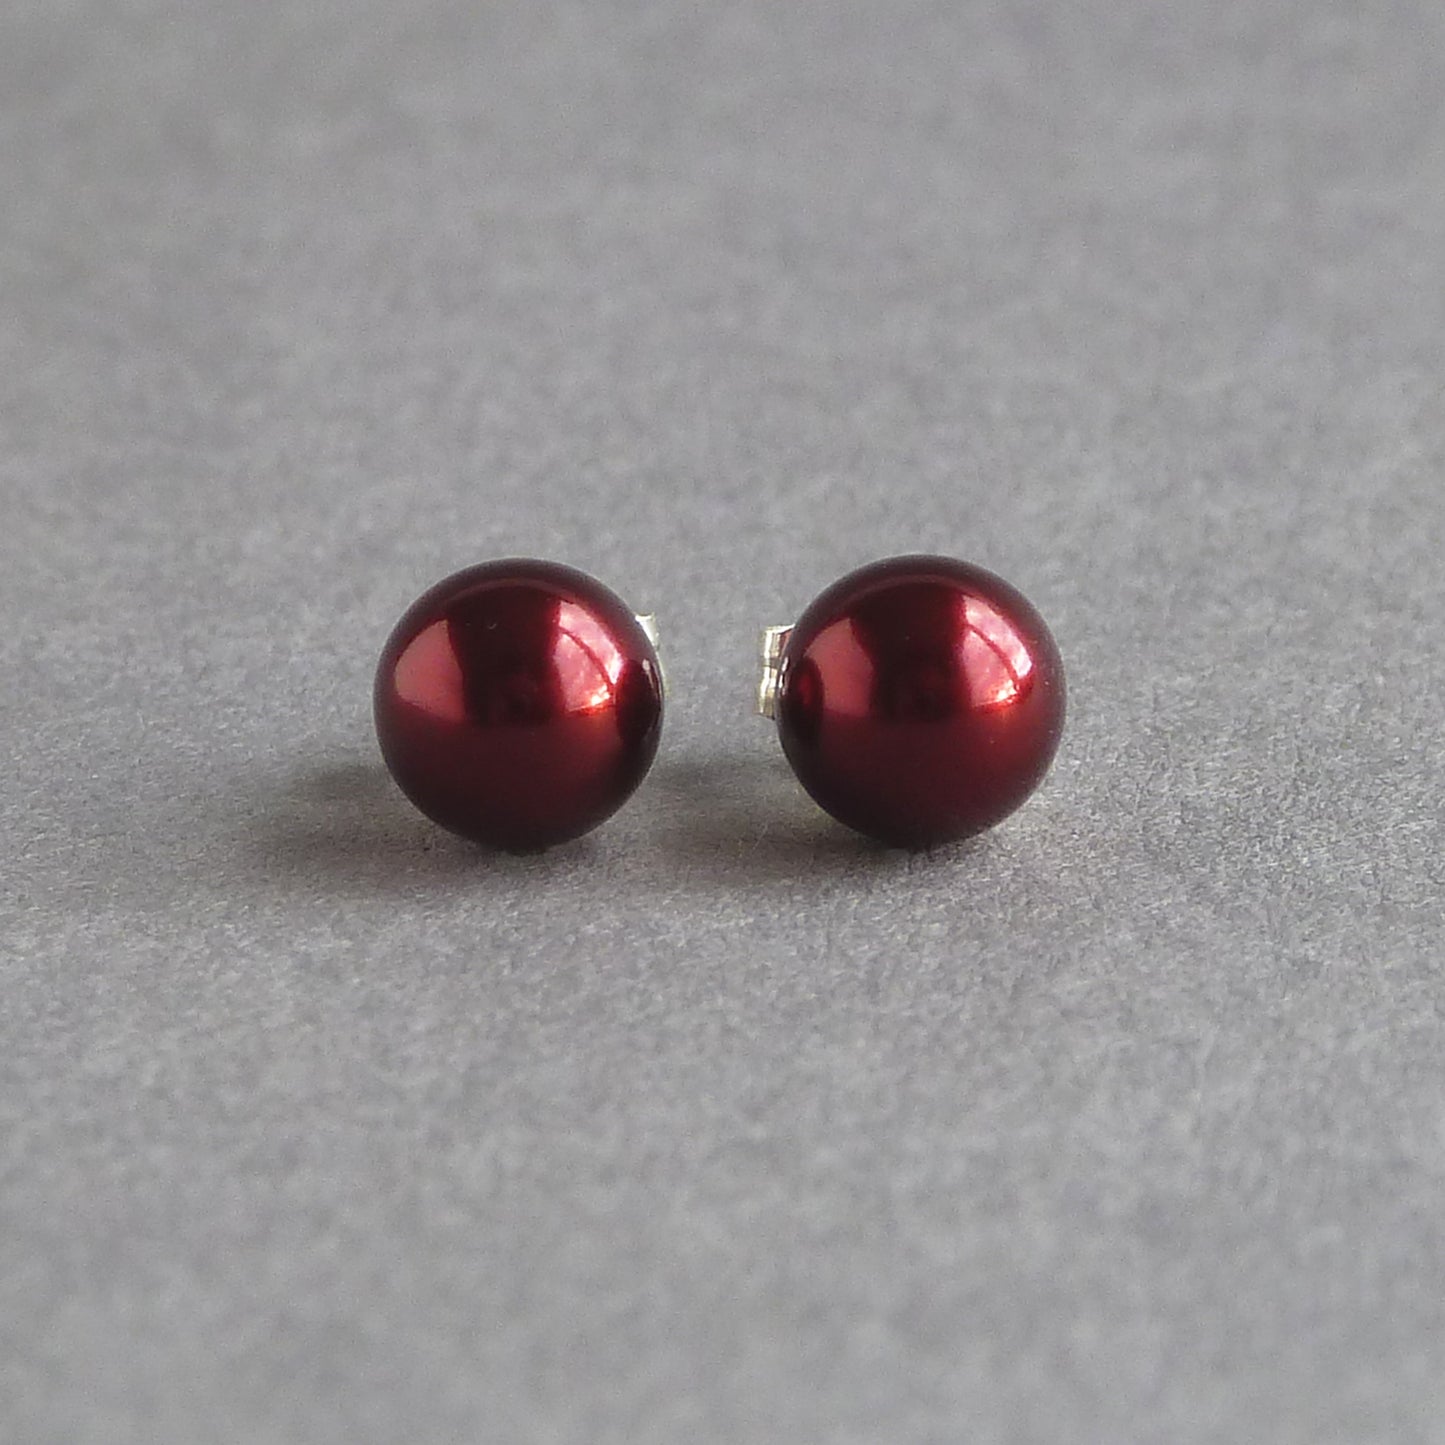 Small burgundy stud earrings